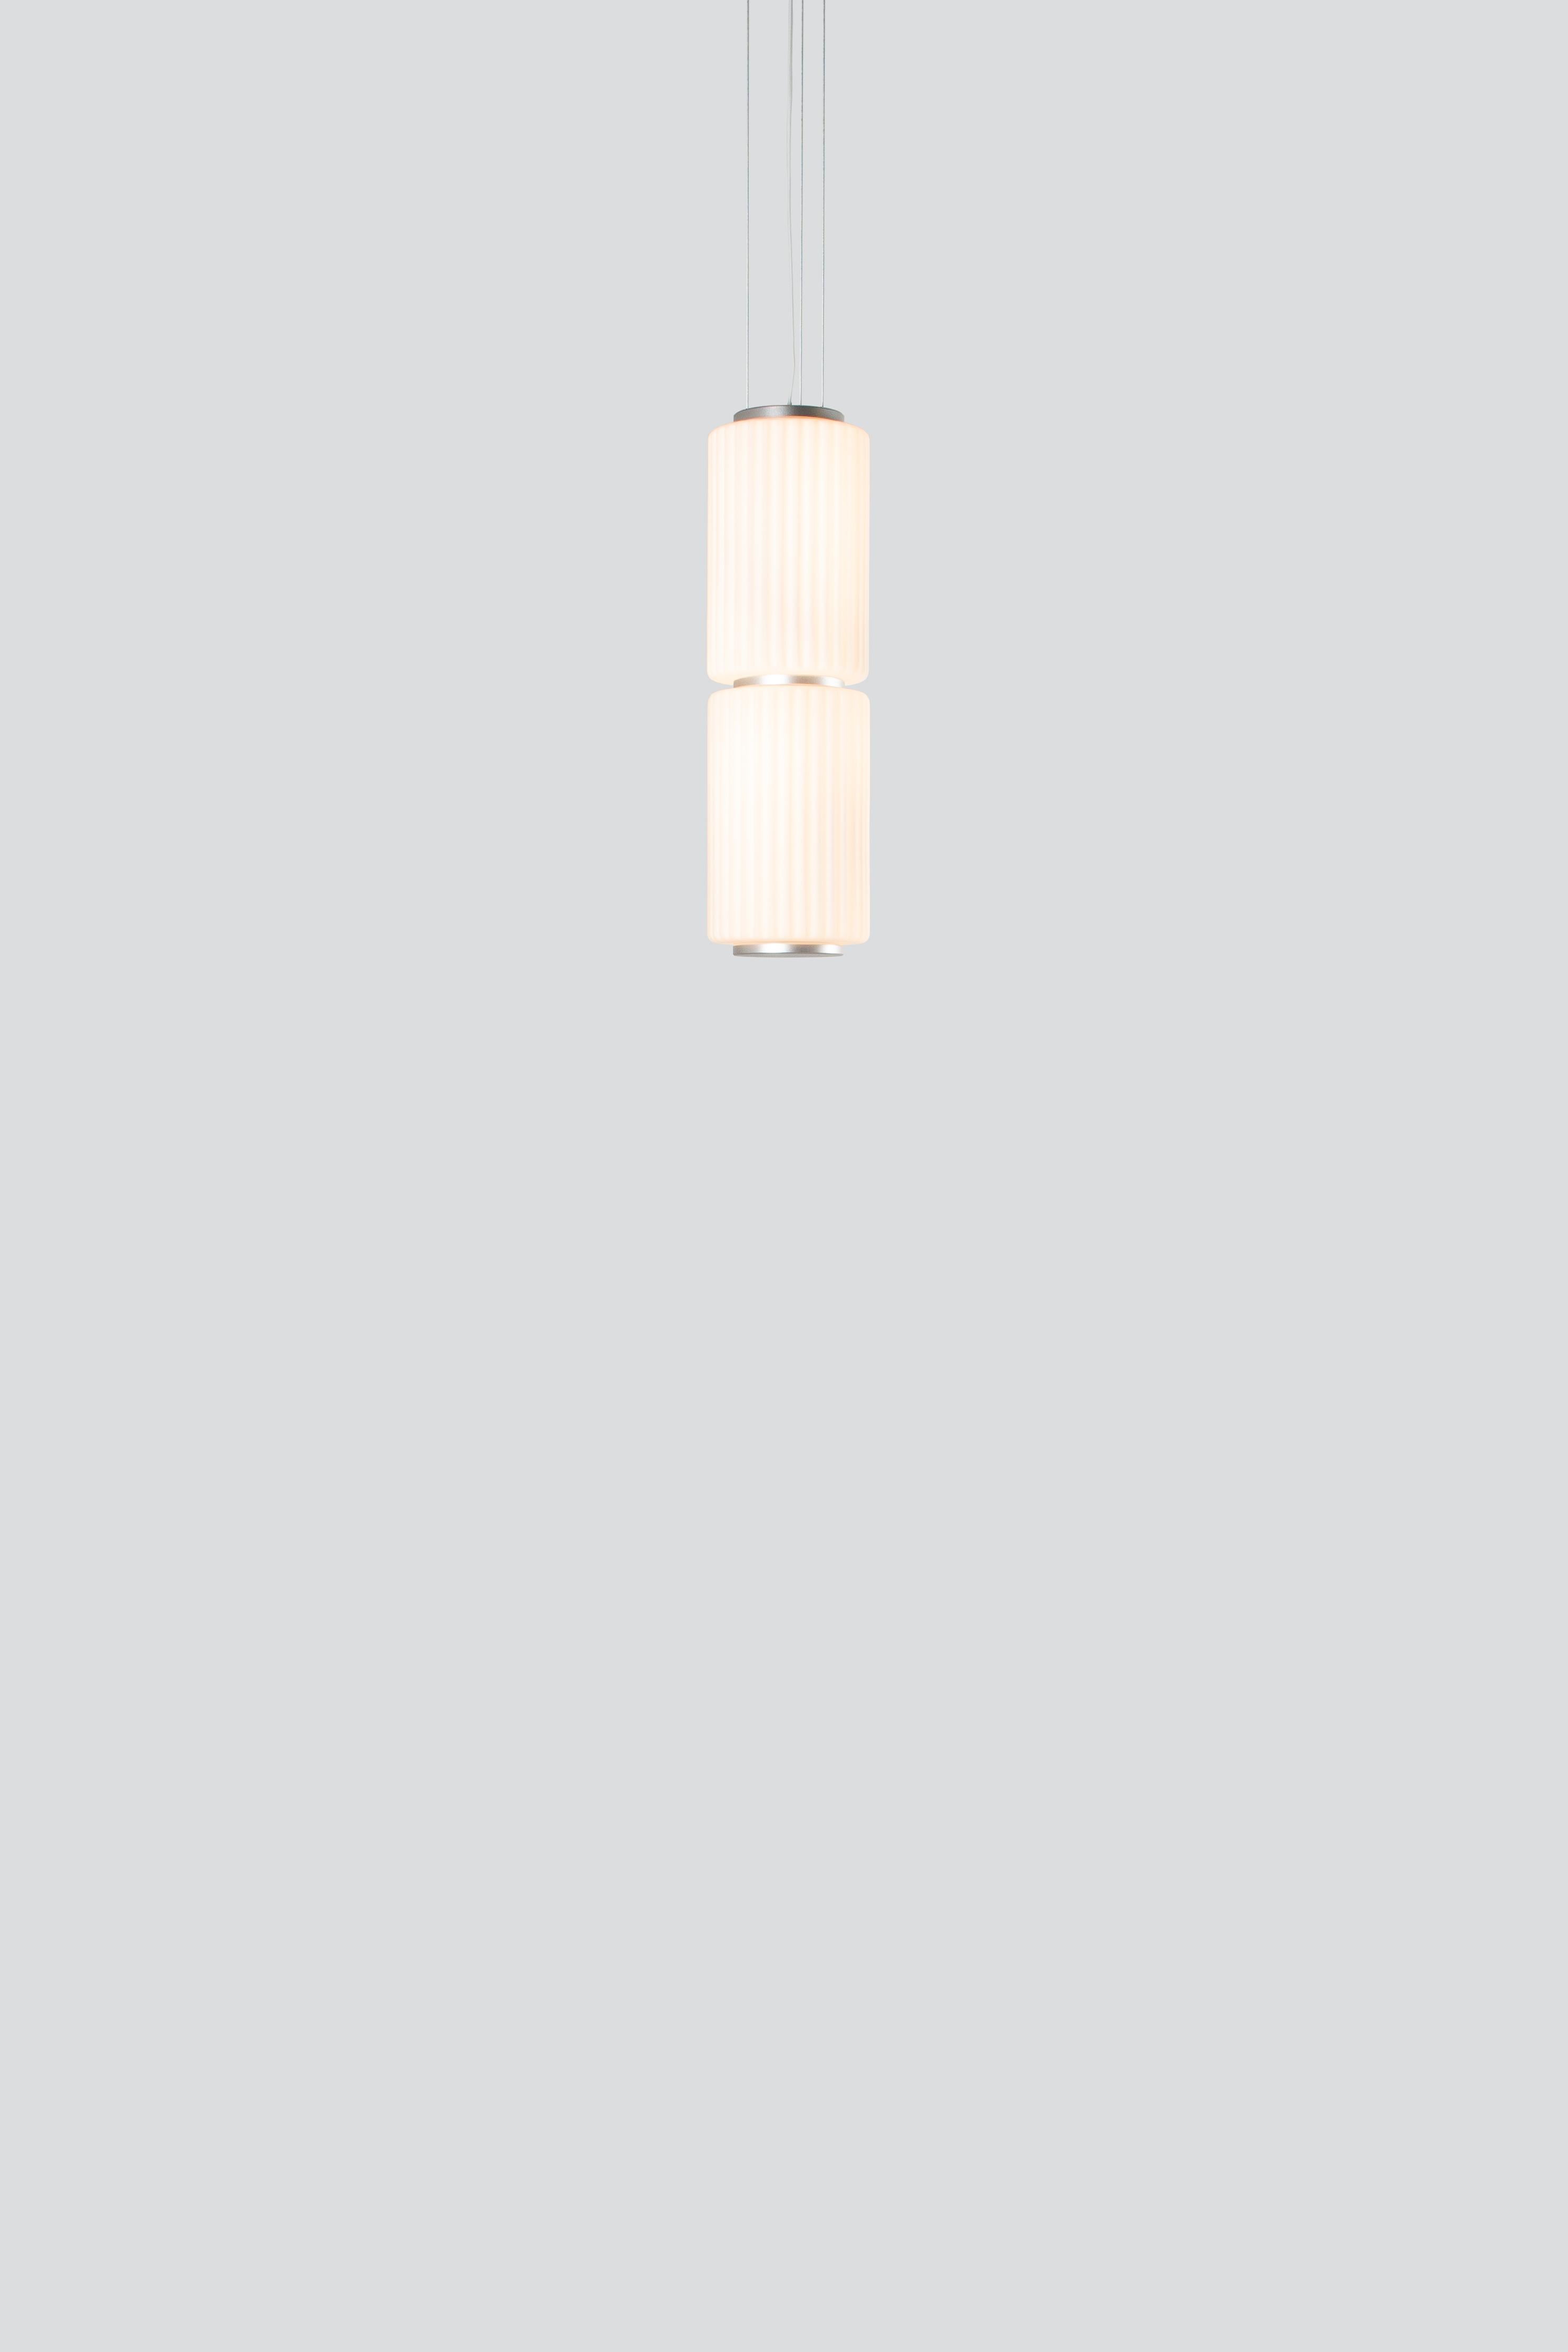 Organic Modern Contemporary Pendant Lamp 'Column' 175-2, Vertical, Ivory For Sale